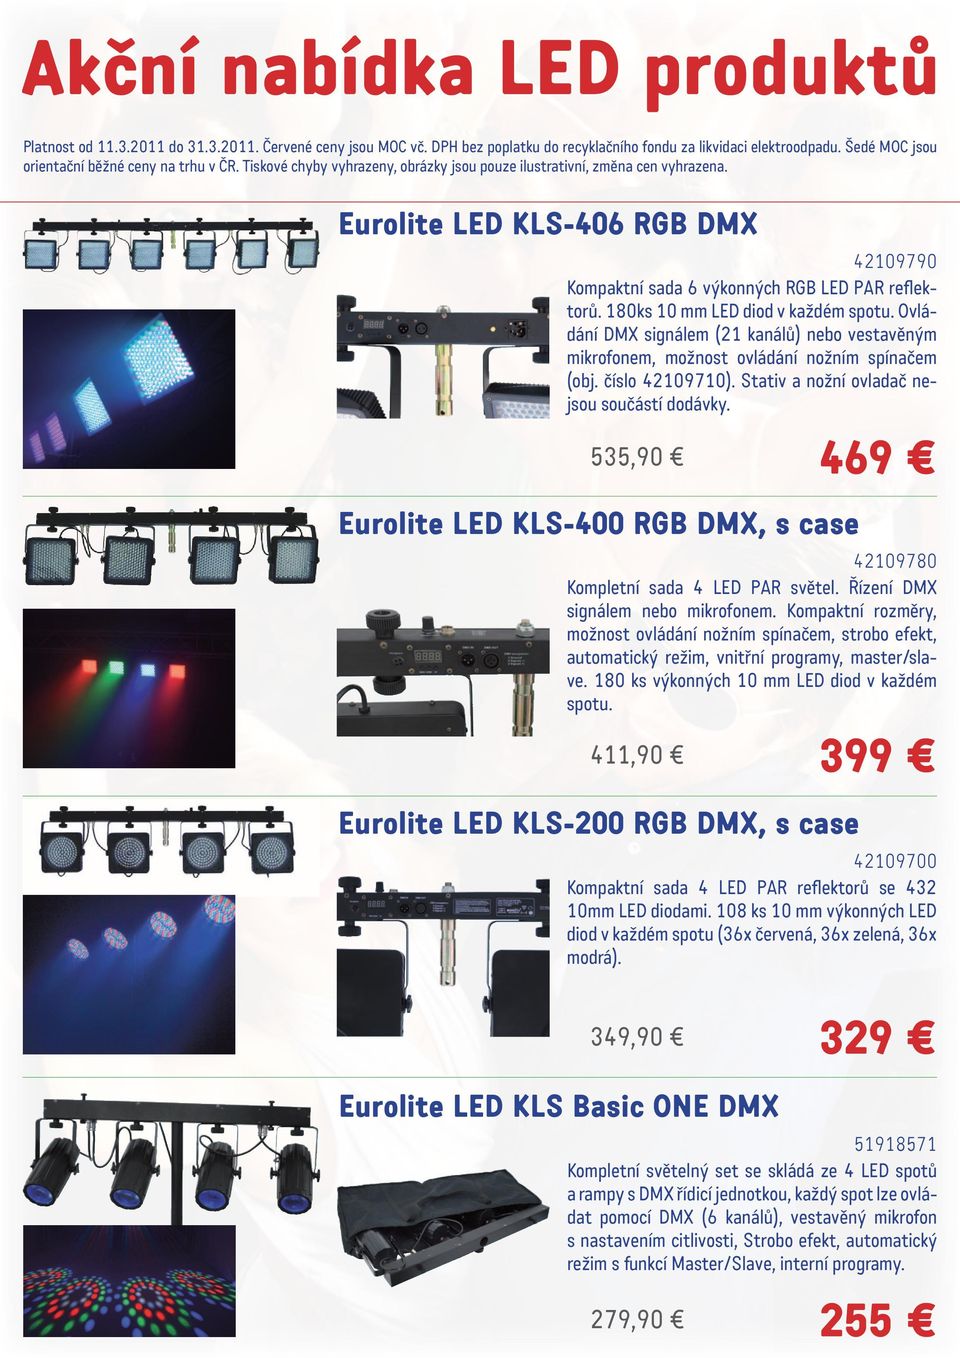 Eurolite LED KLS-406 RGB DMX 42109790 Kompaktní sada 6 výkonných RGB LED PAR reflektorů. 180ks 10 mm LED diod v každém spotu.